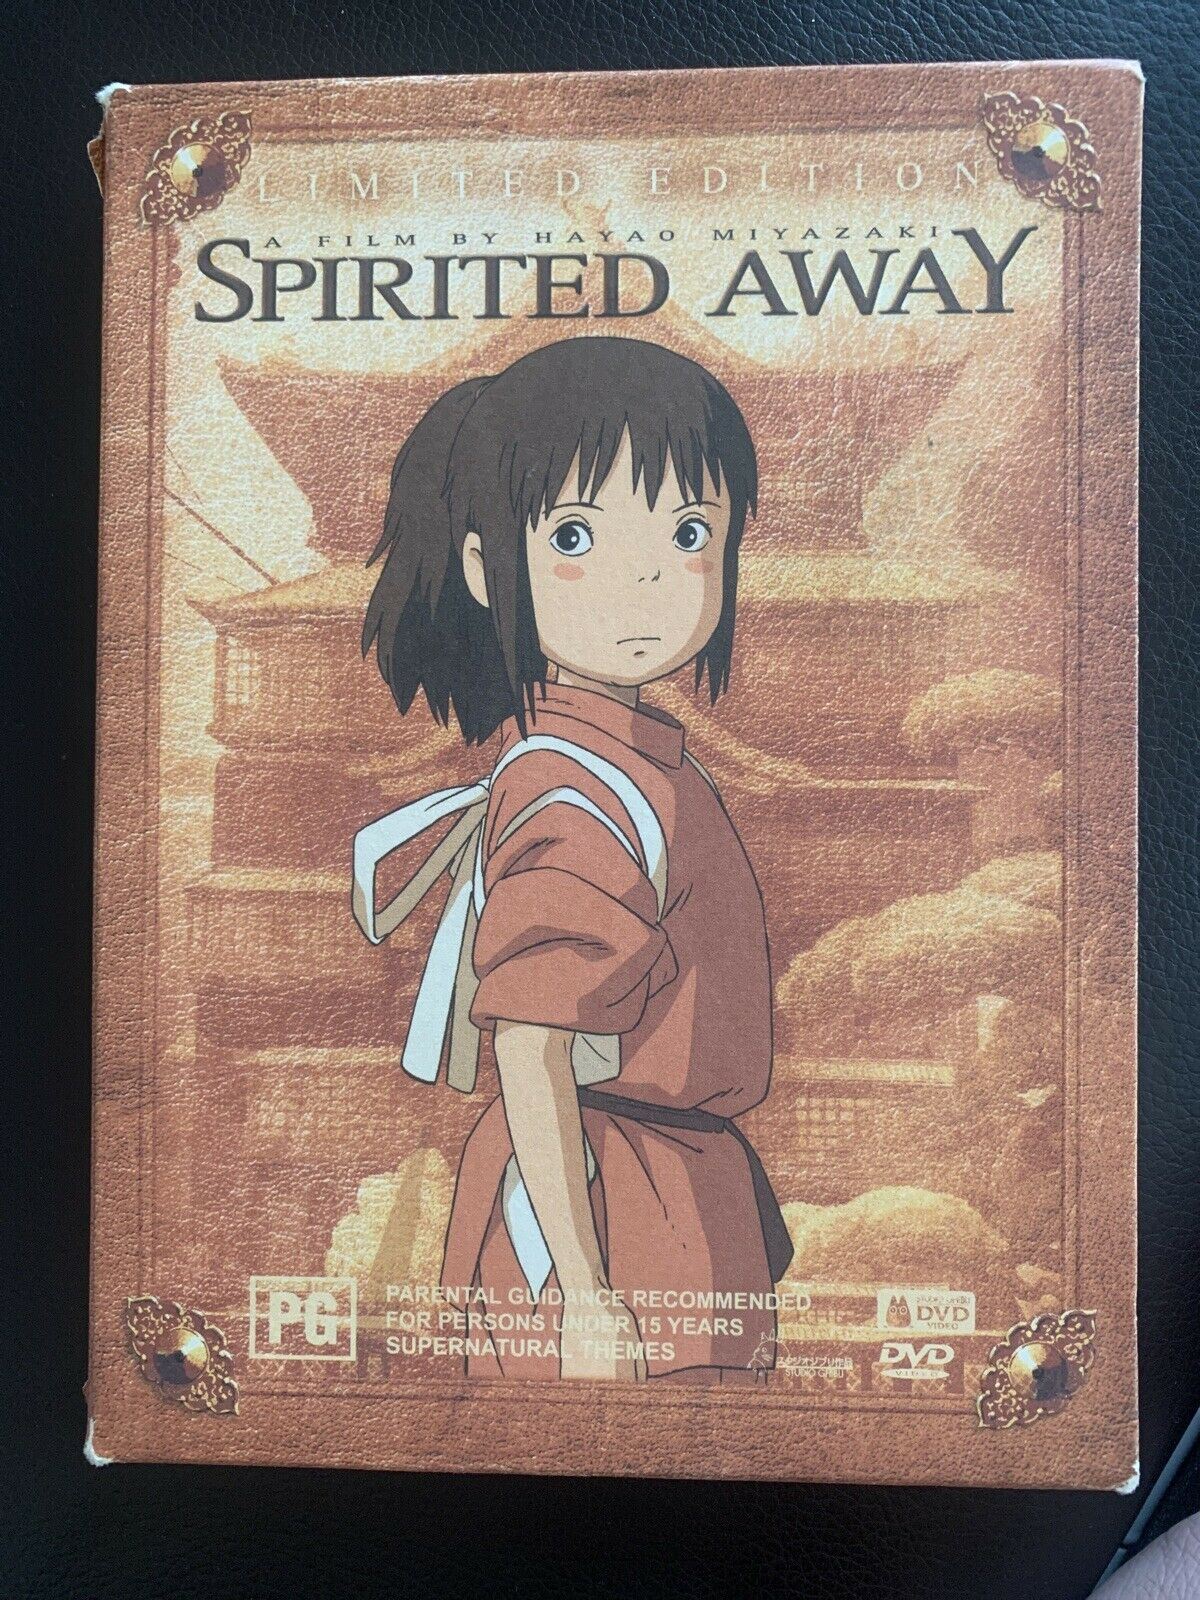 Spirited Away - Limited Edition (DVD, 2001, 2-Disc Set) Hayao Miyazaki Region 4